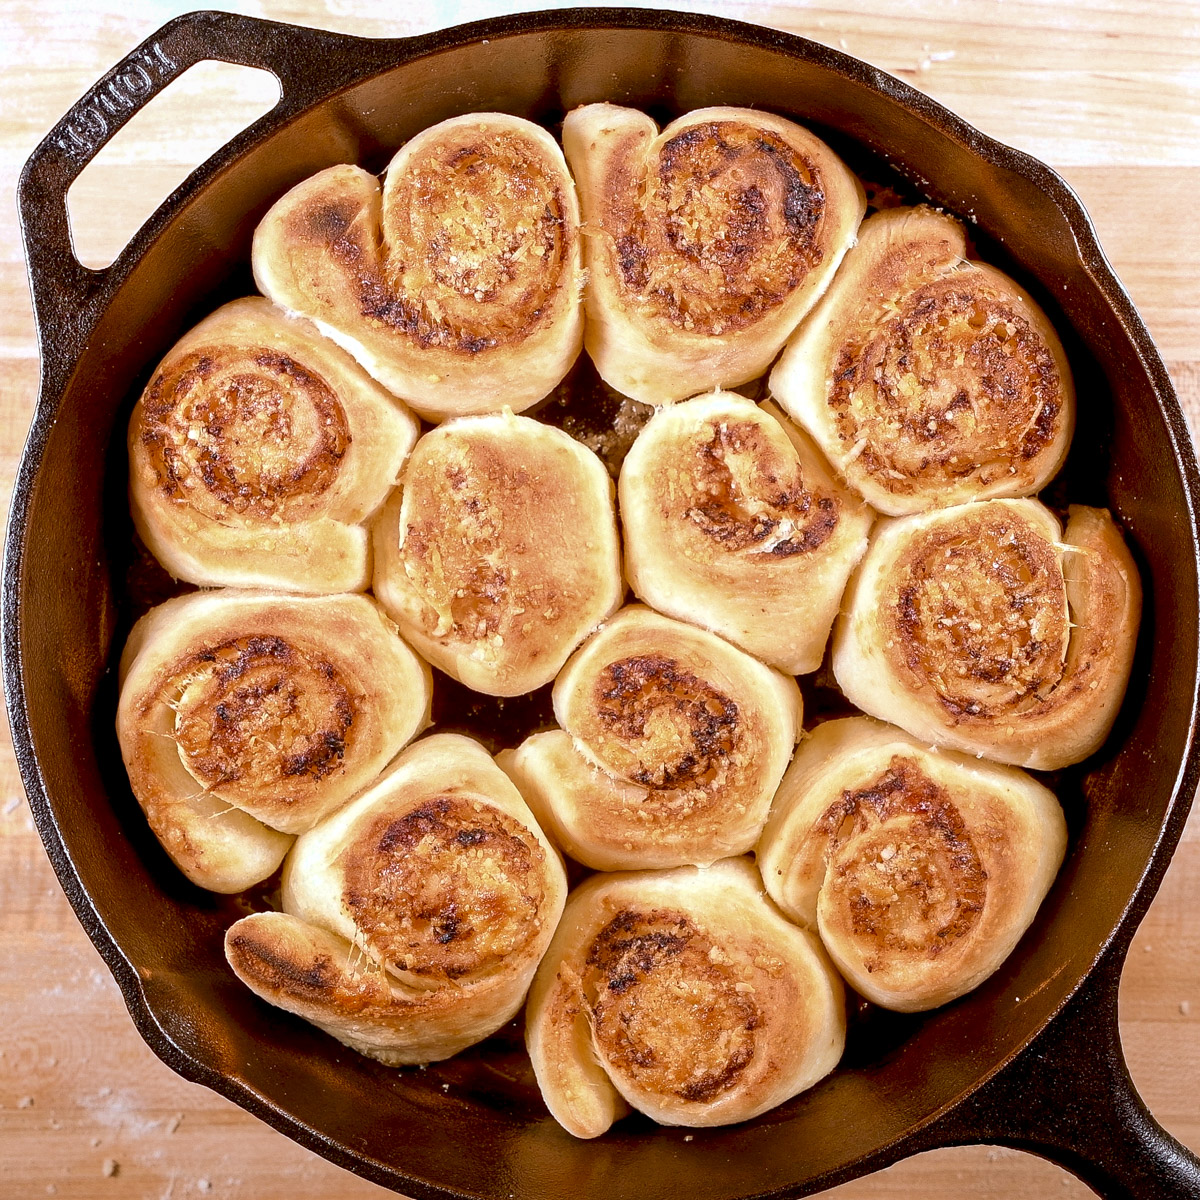 Cheesy garlic rolls ready to serve.